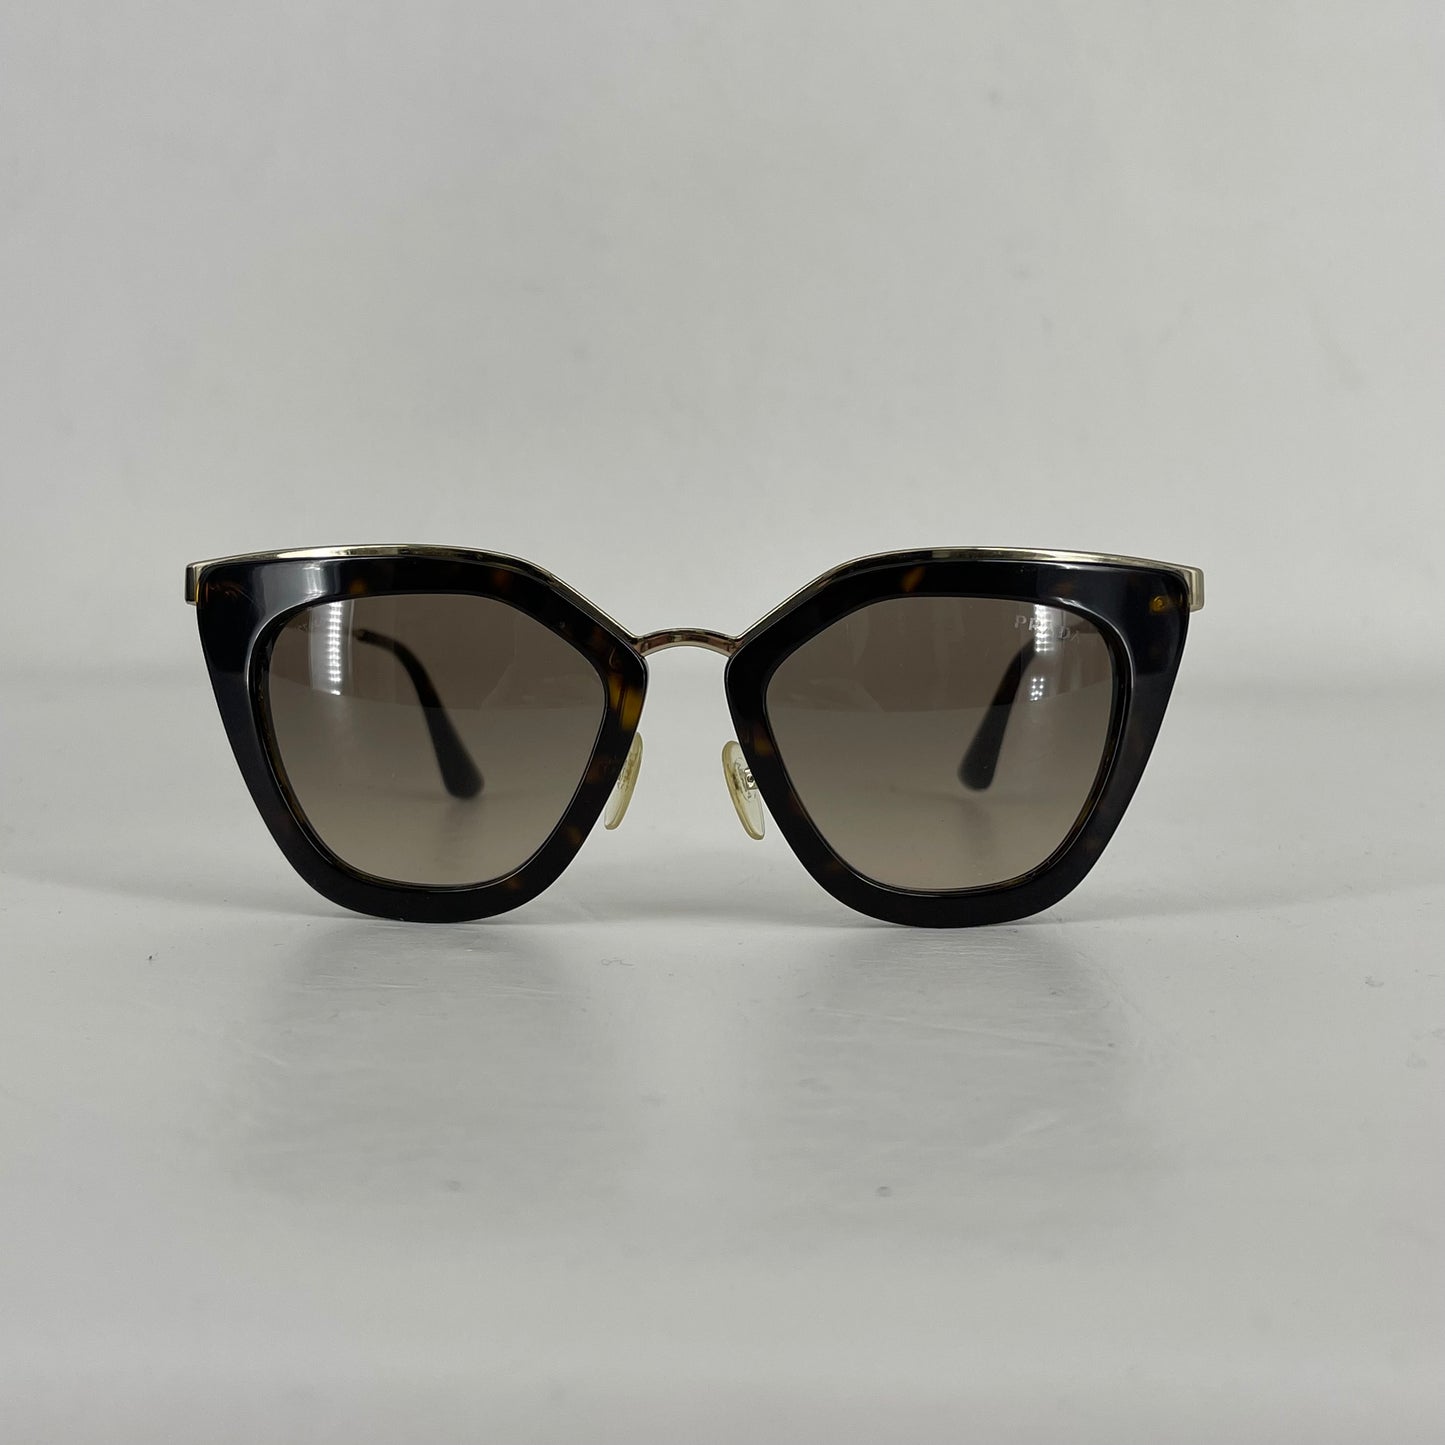 Authentic Prada Tortoiseshell Cat Eye Sunglasses SPR535